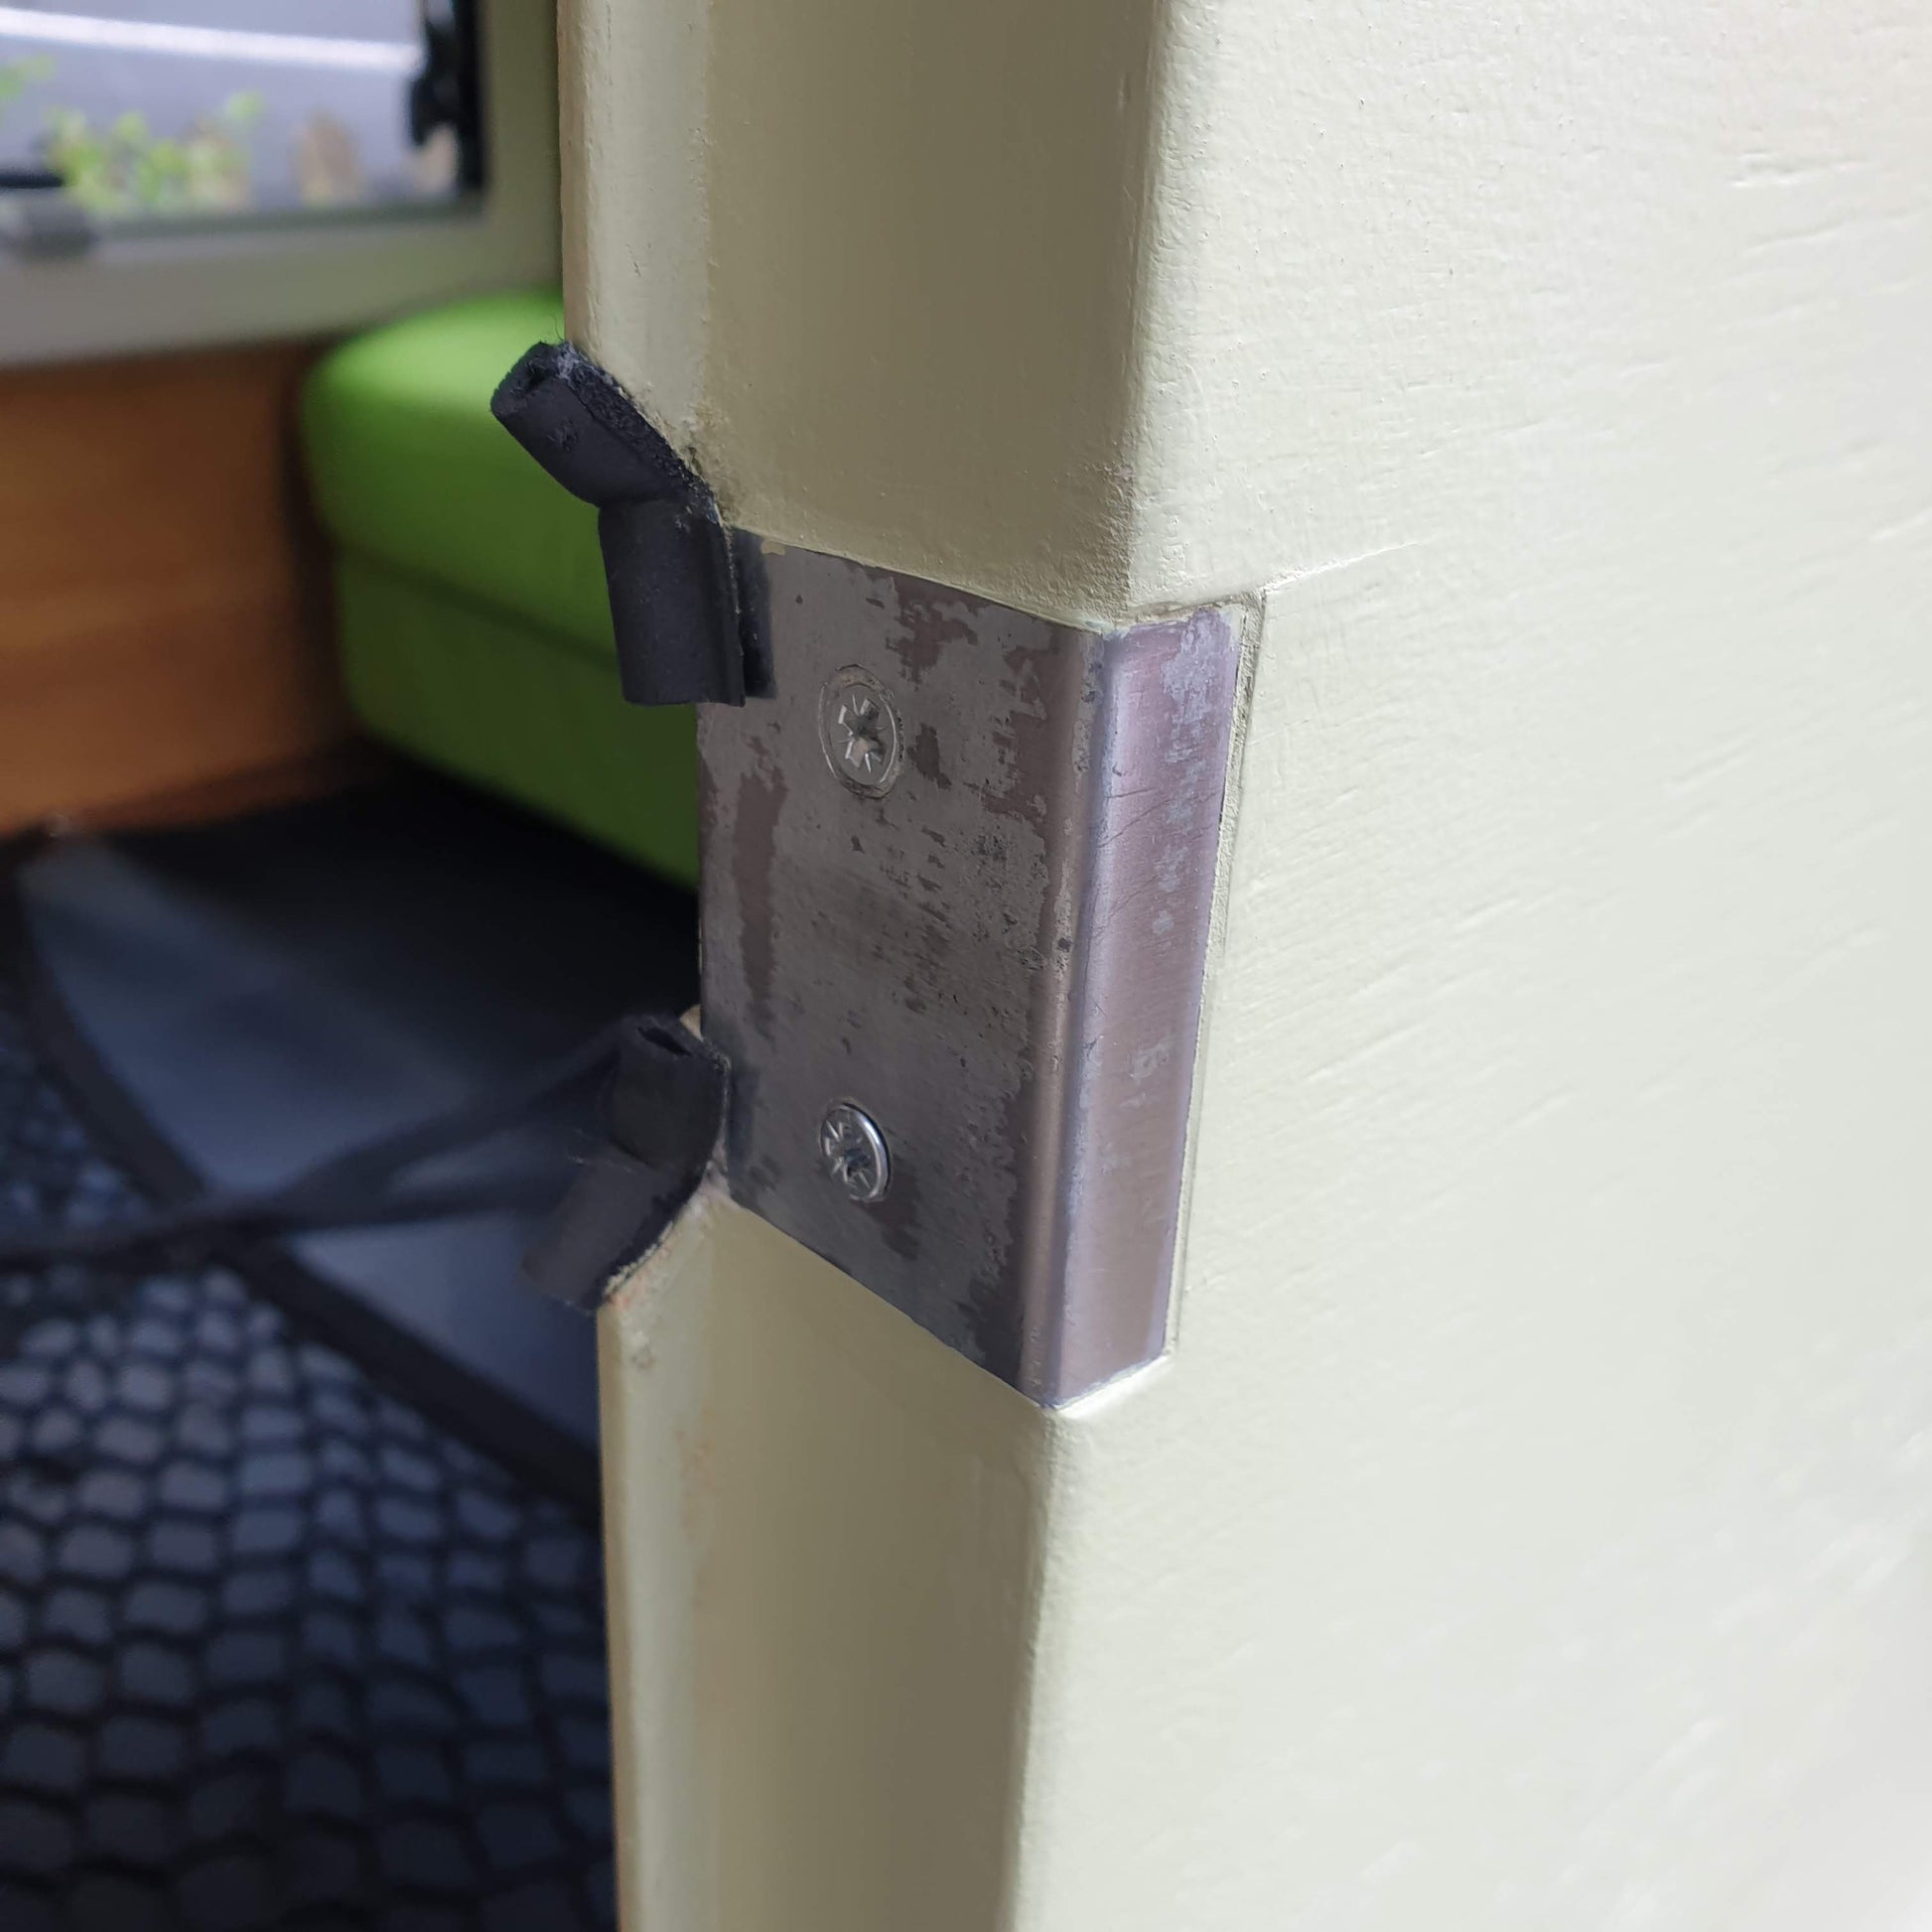 Protective steel plate to prevent door frame damage